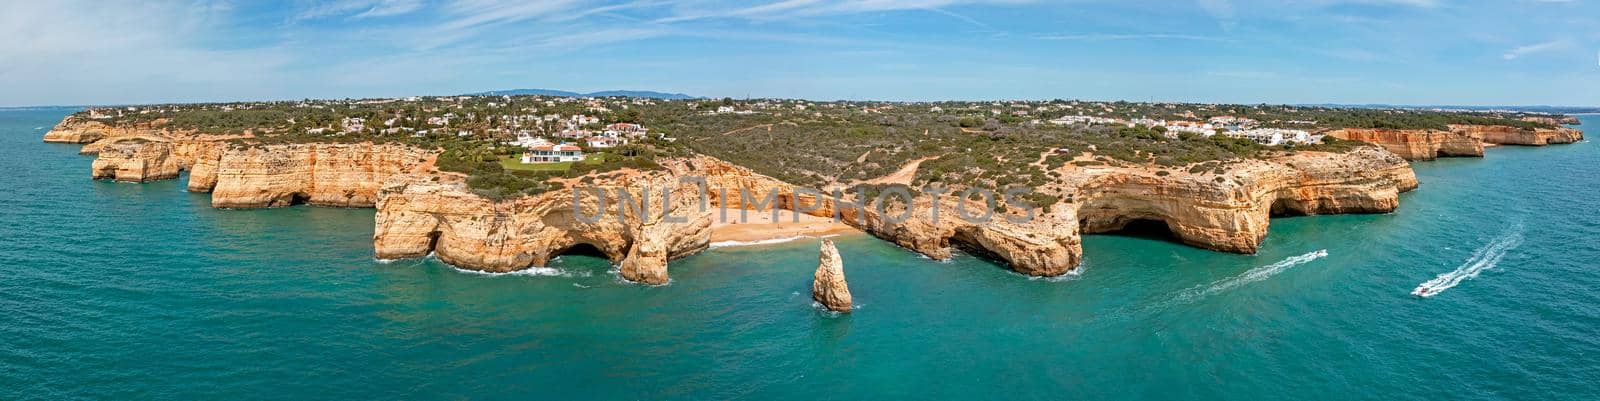 Aerial panorama from Praia do Carvalho near Benagil in the Algarve Portugal by devy